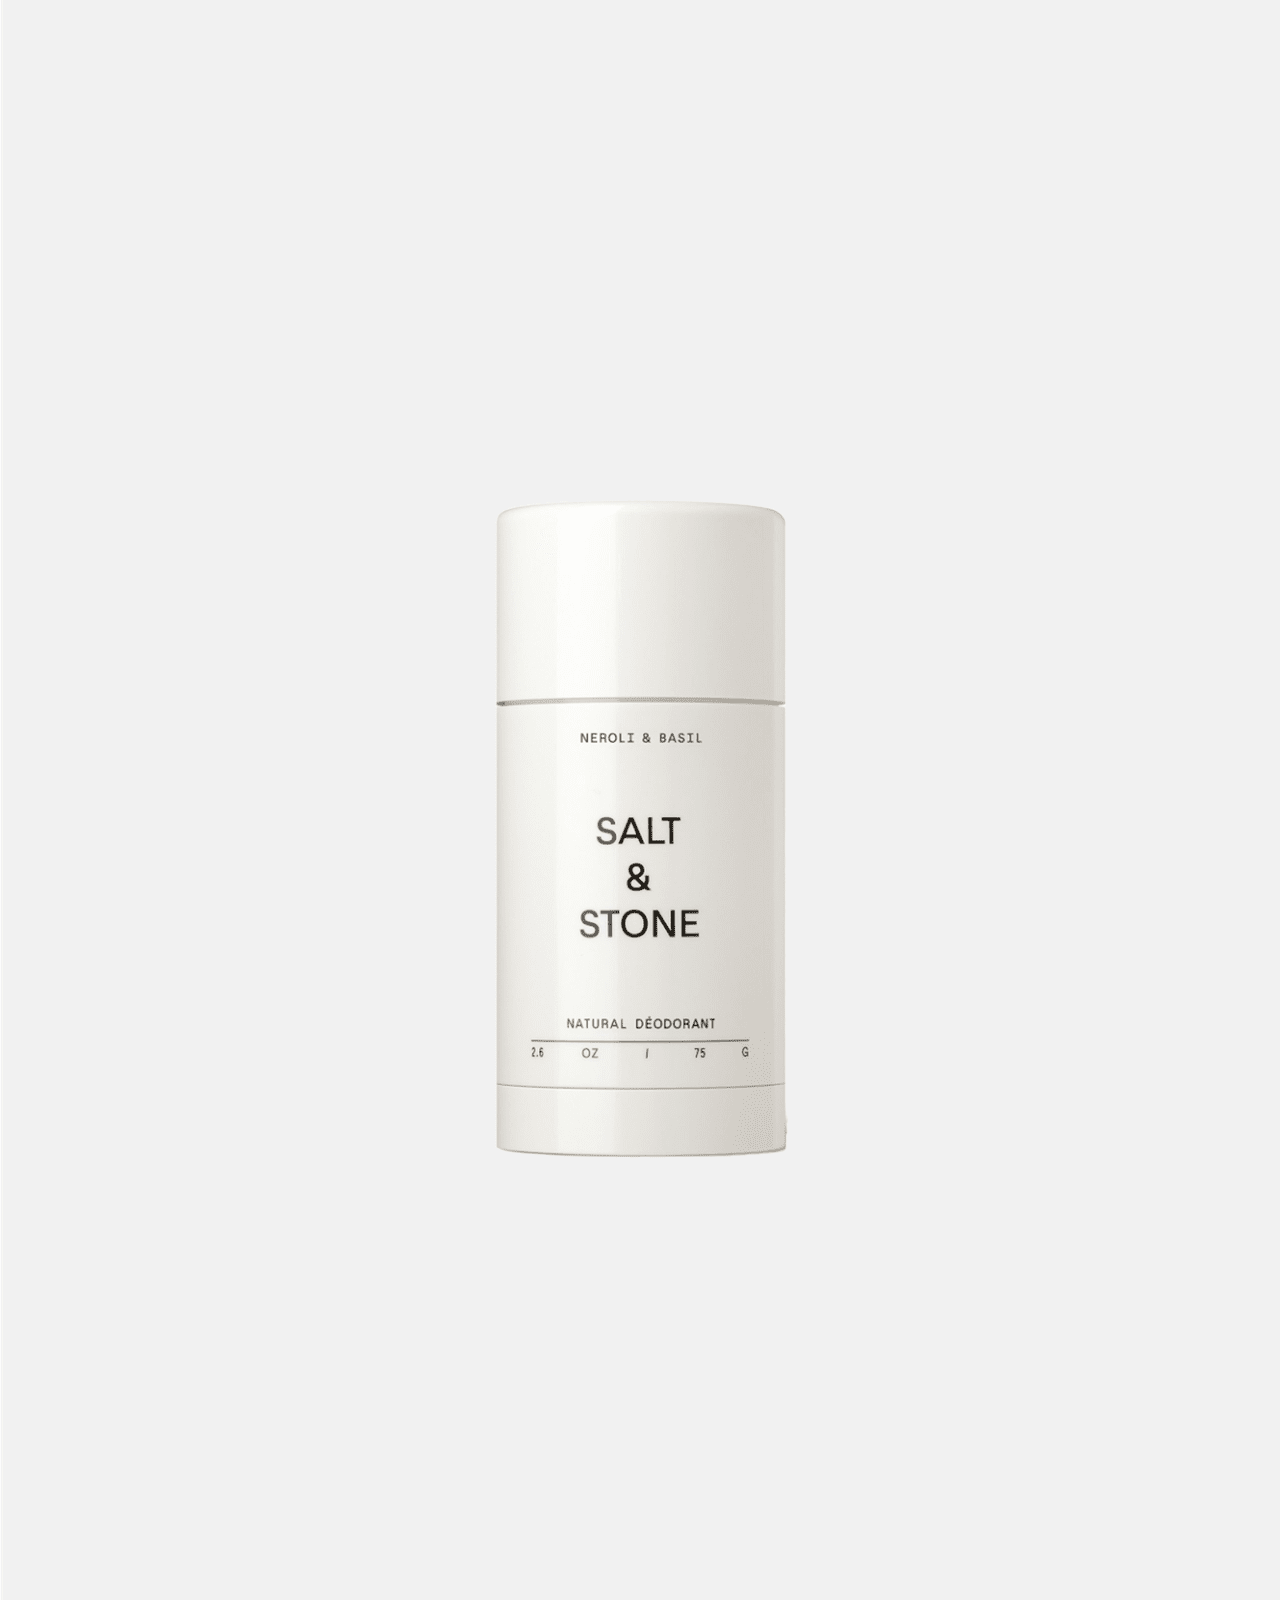 Natural Deodorant | Neroli & Basil Salt & Stone